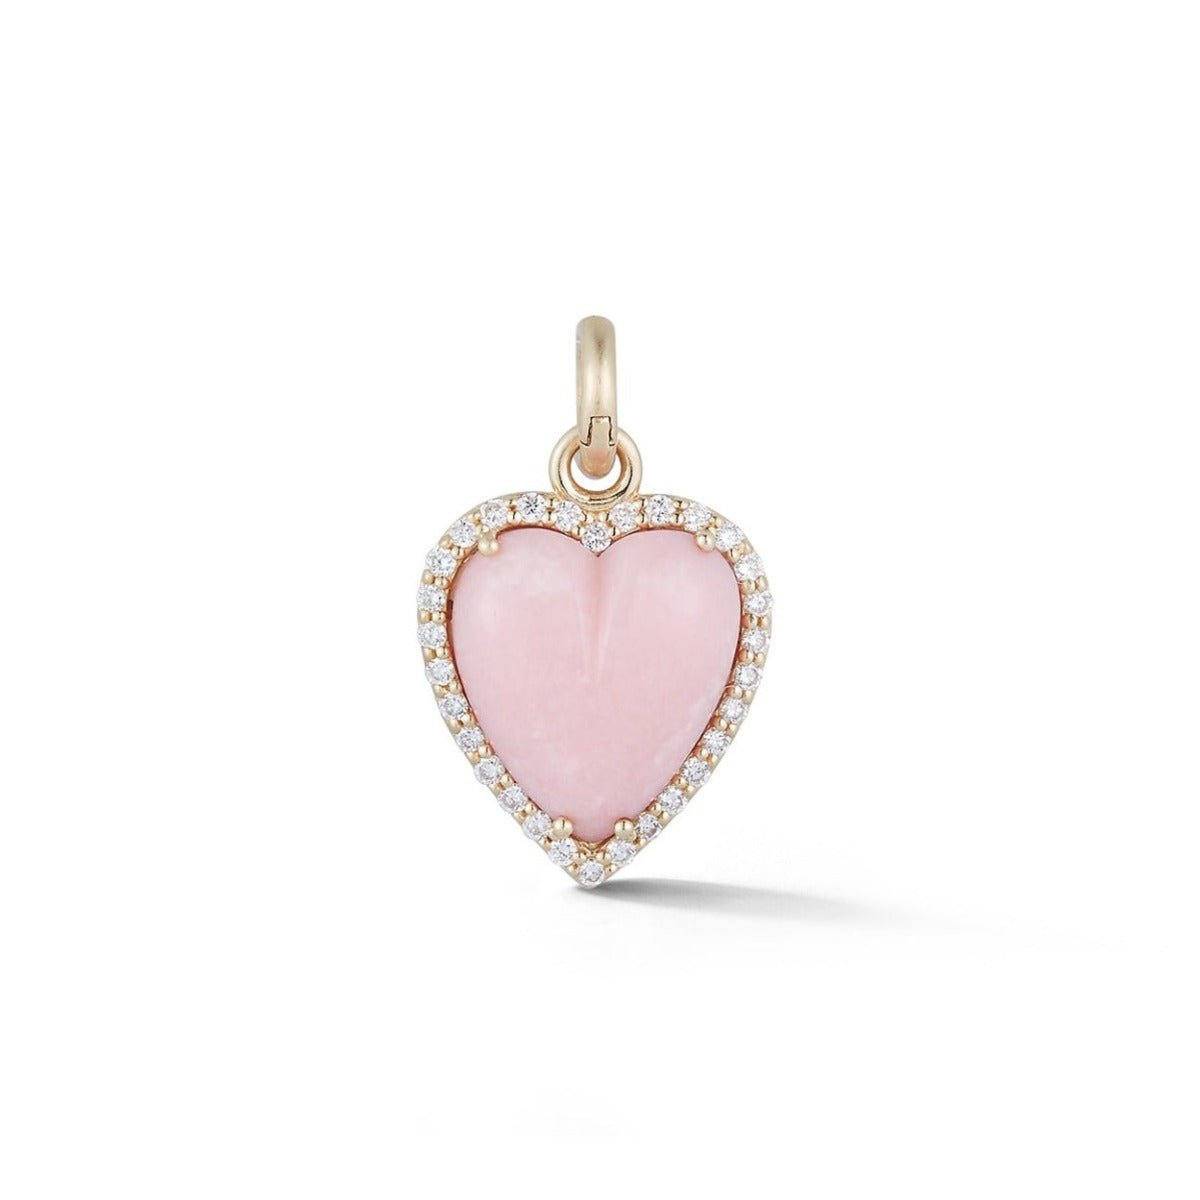 Storrow 14K Gold Diamond & Pink Opal Alana Large Heart Charm